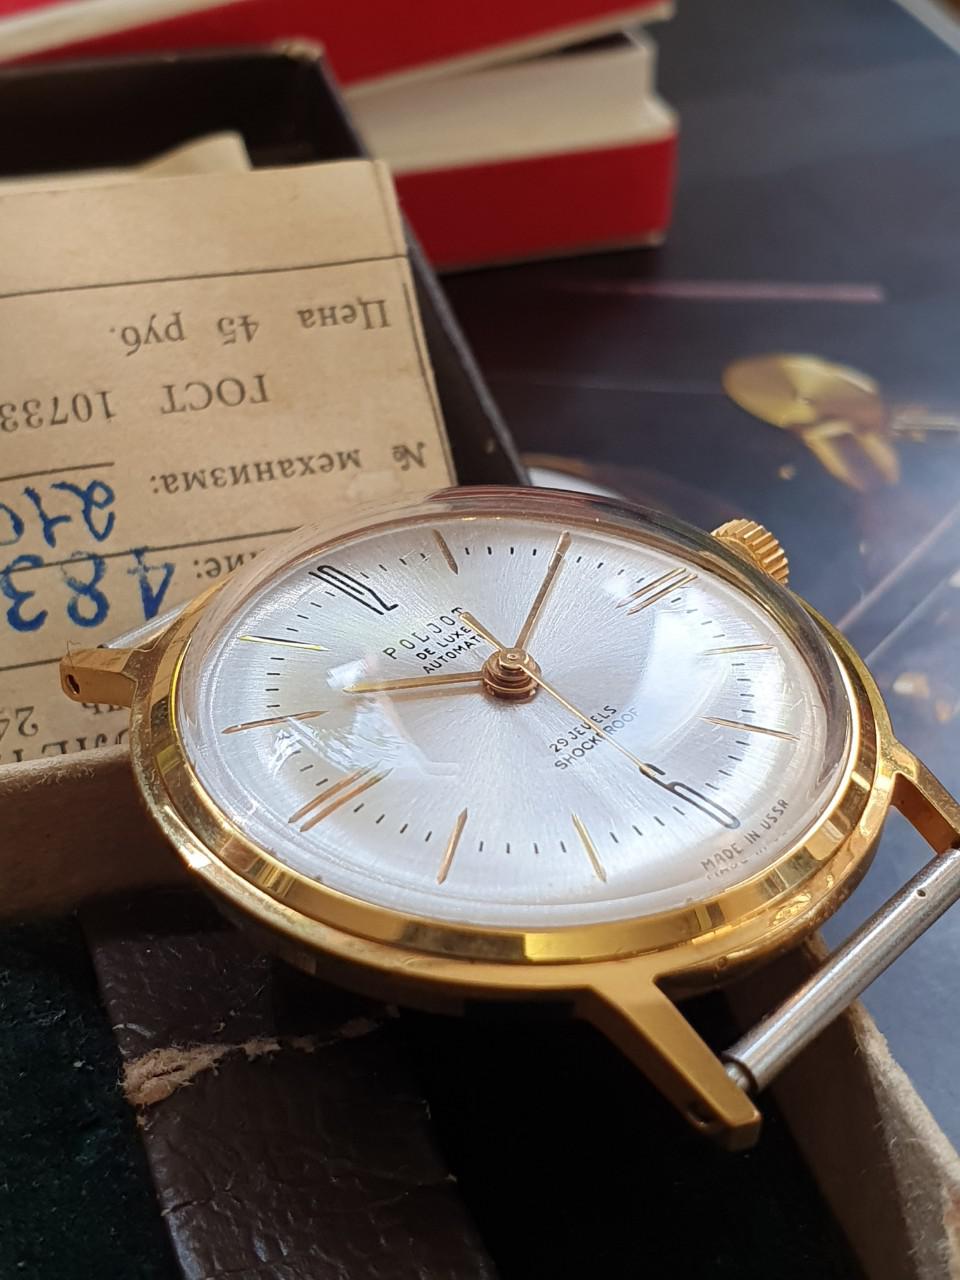 Đồng hồ Poljot 29 jewels automatic de luxe NOS nguyên sổ hộp